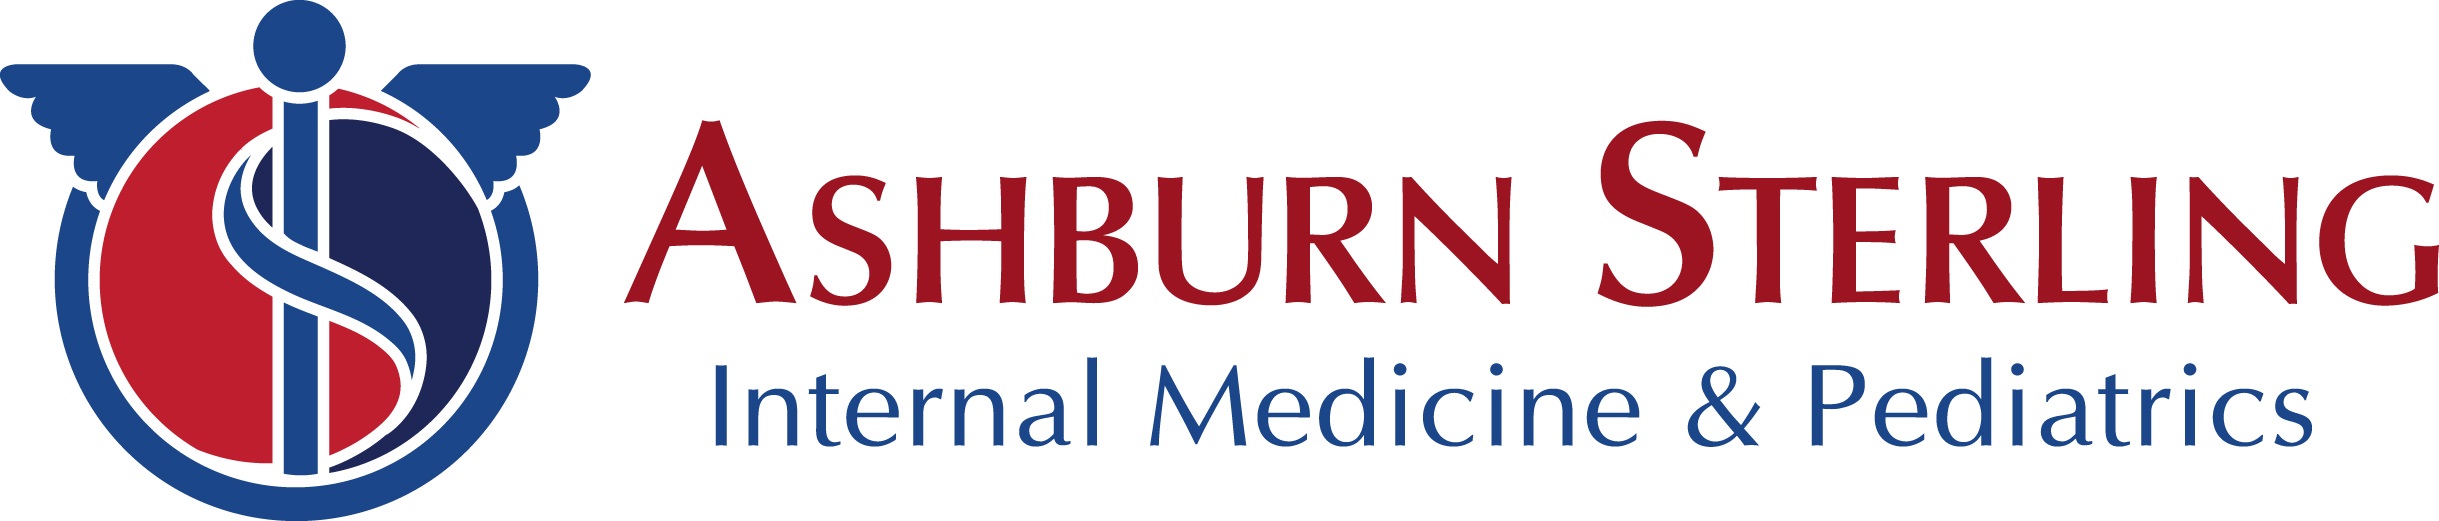 Ashburn Sterling Internal Medicine and Pediatrics